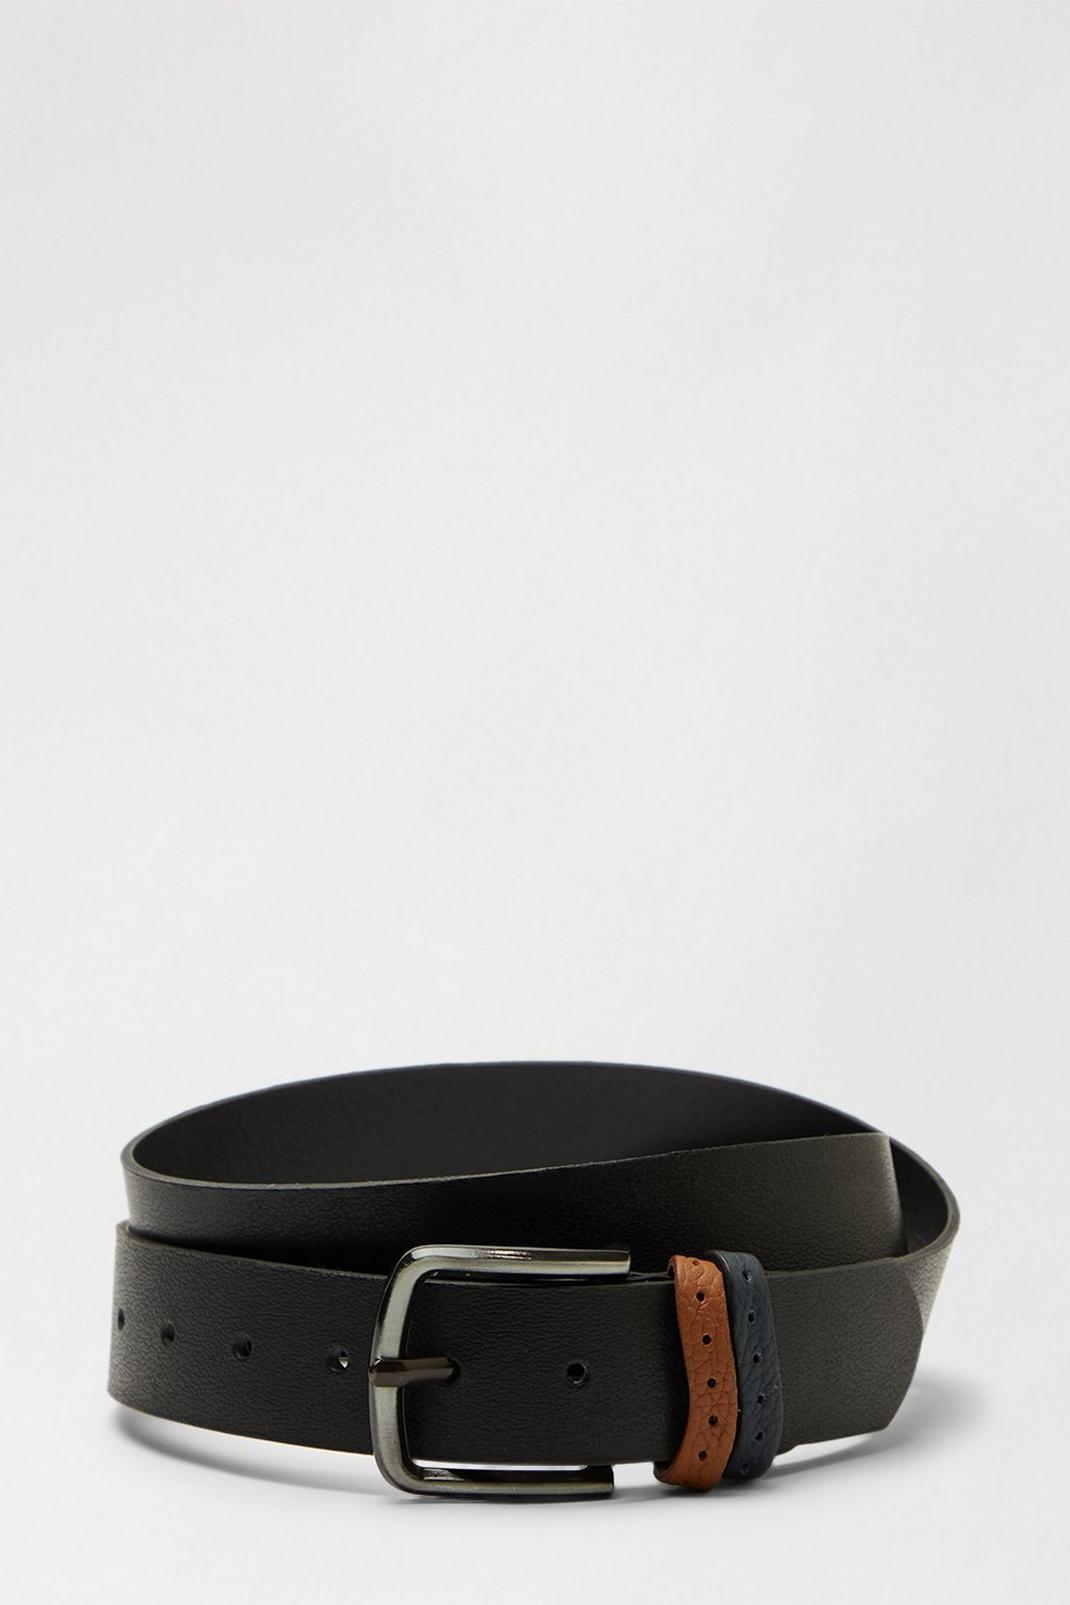 105 Leather Black Double Contrast Keeper Belt image number 1